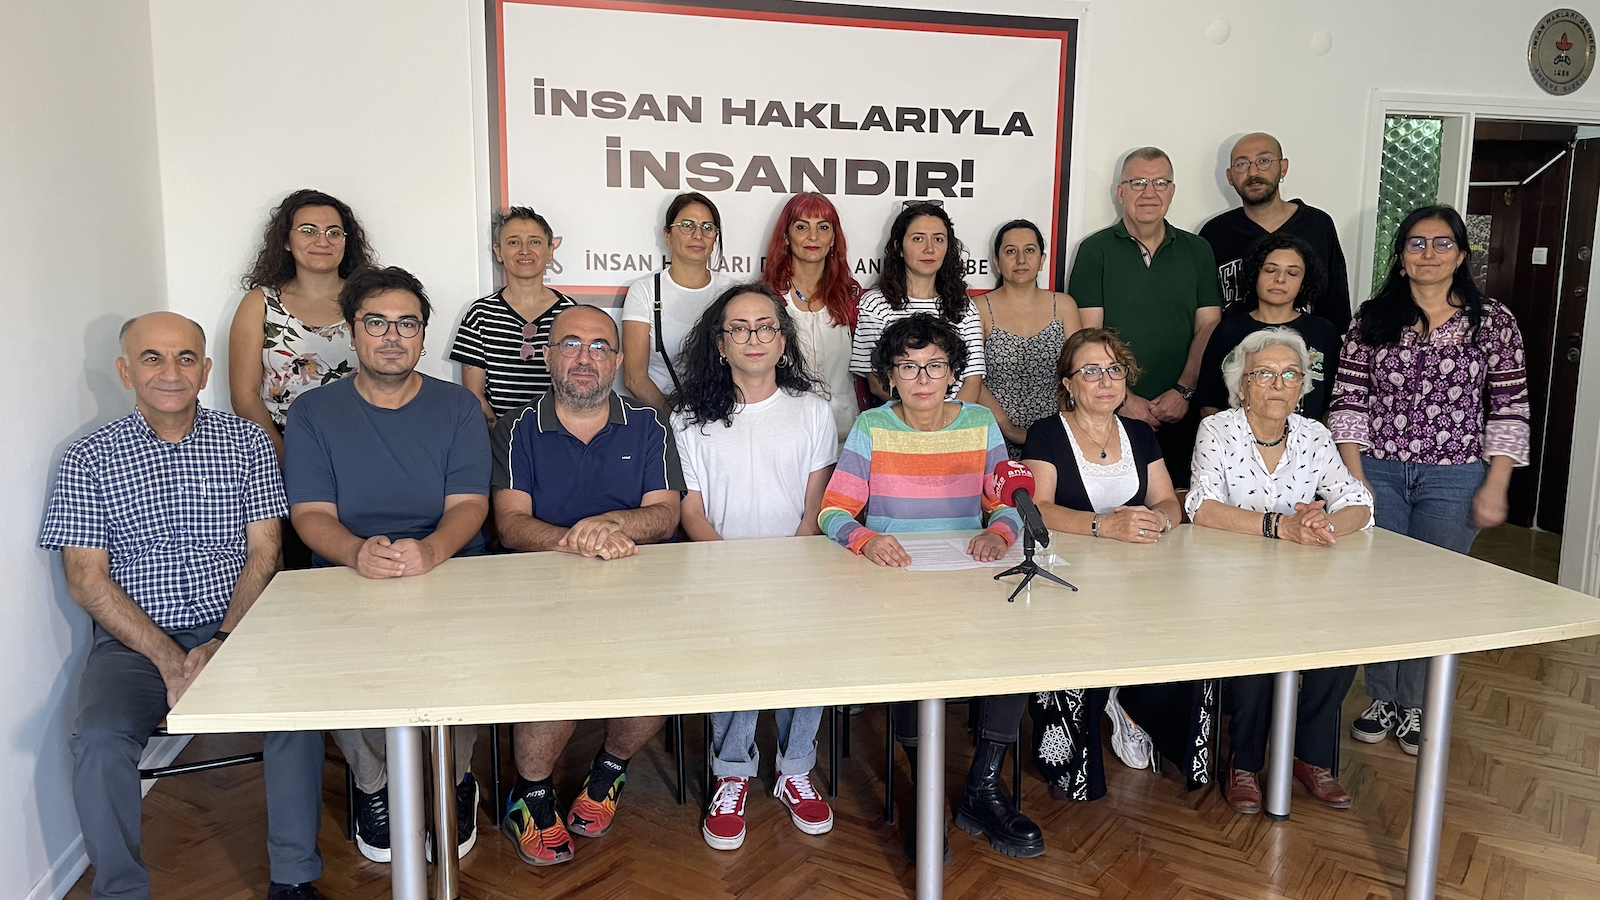 İHD Ankara Şubesi: 17 Eylül mitingi nefret suçudur, insan olmayı protesto edemezsiniz! | Kaos GL - LGBTİ+ Haber Portalı Haber